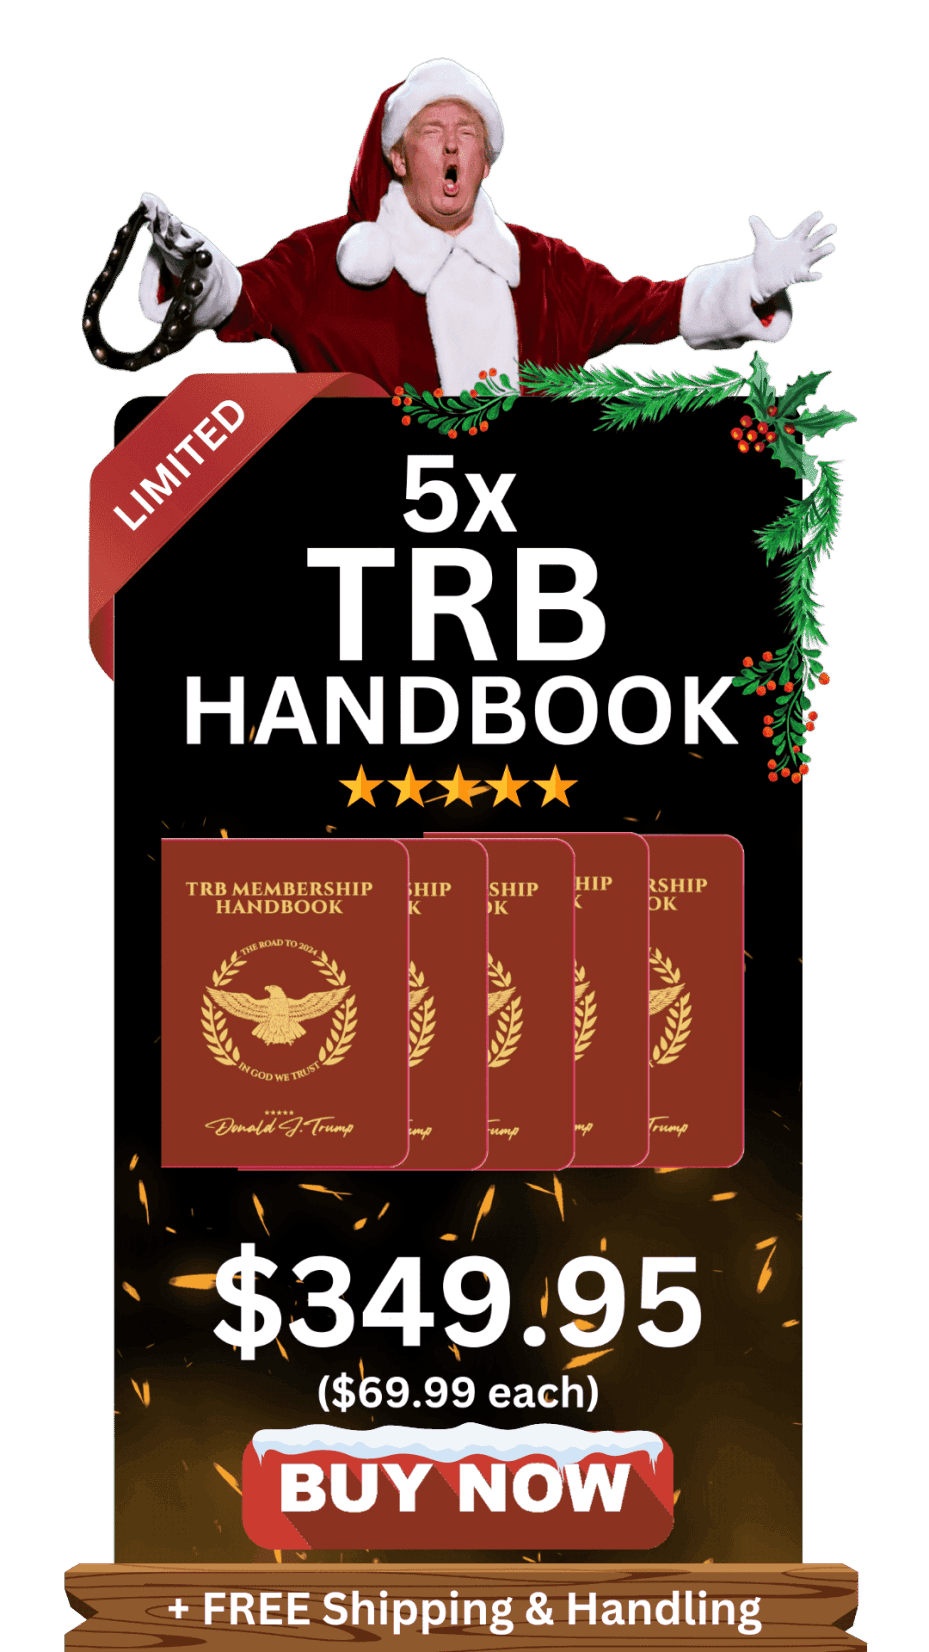 TRB Membership Handbook buy 5x